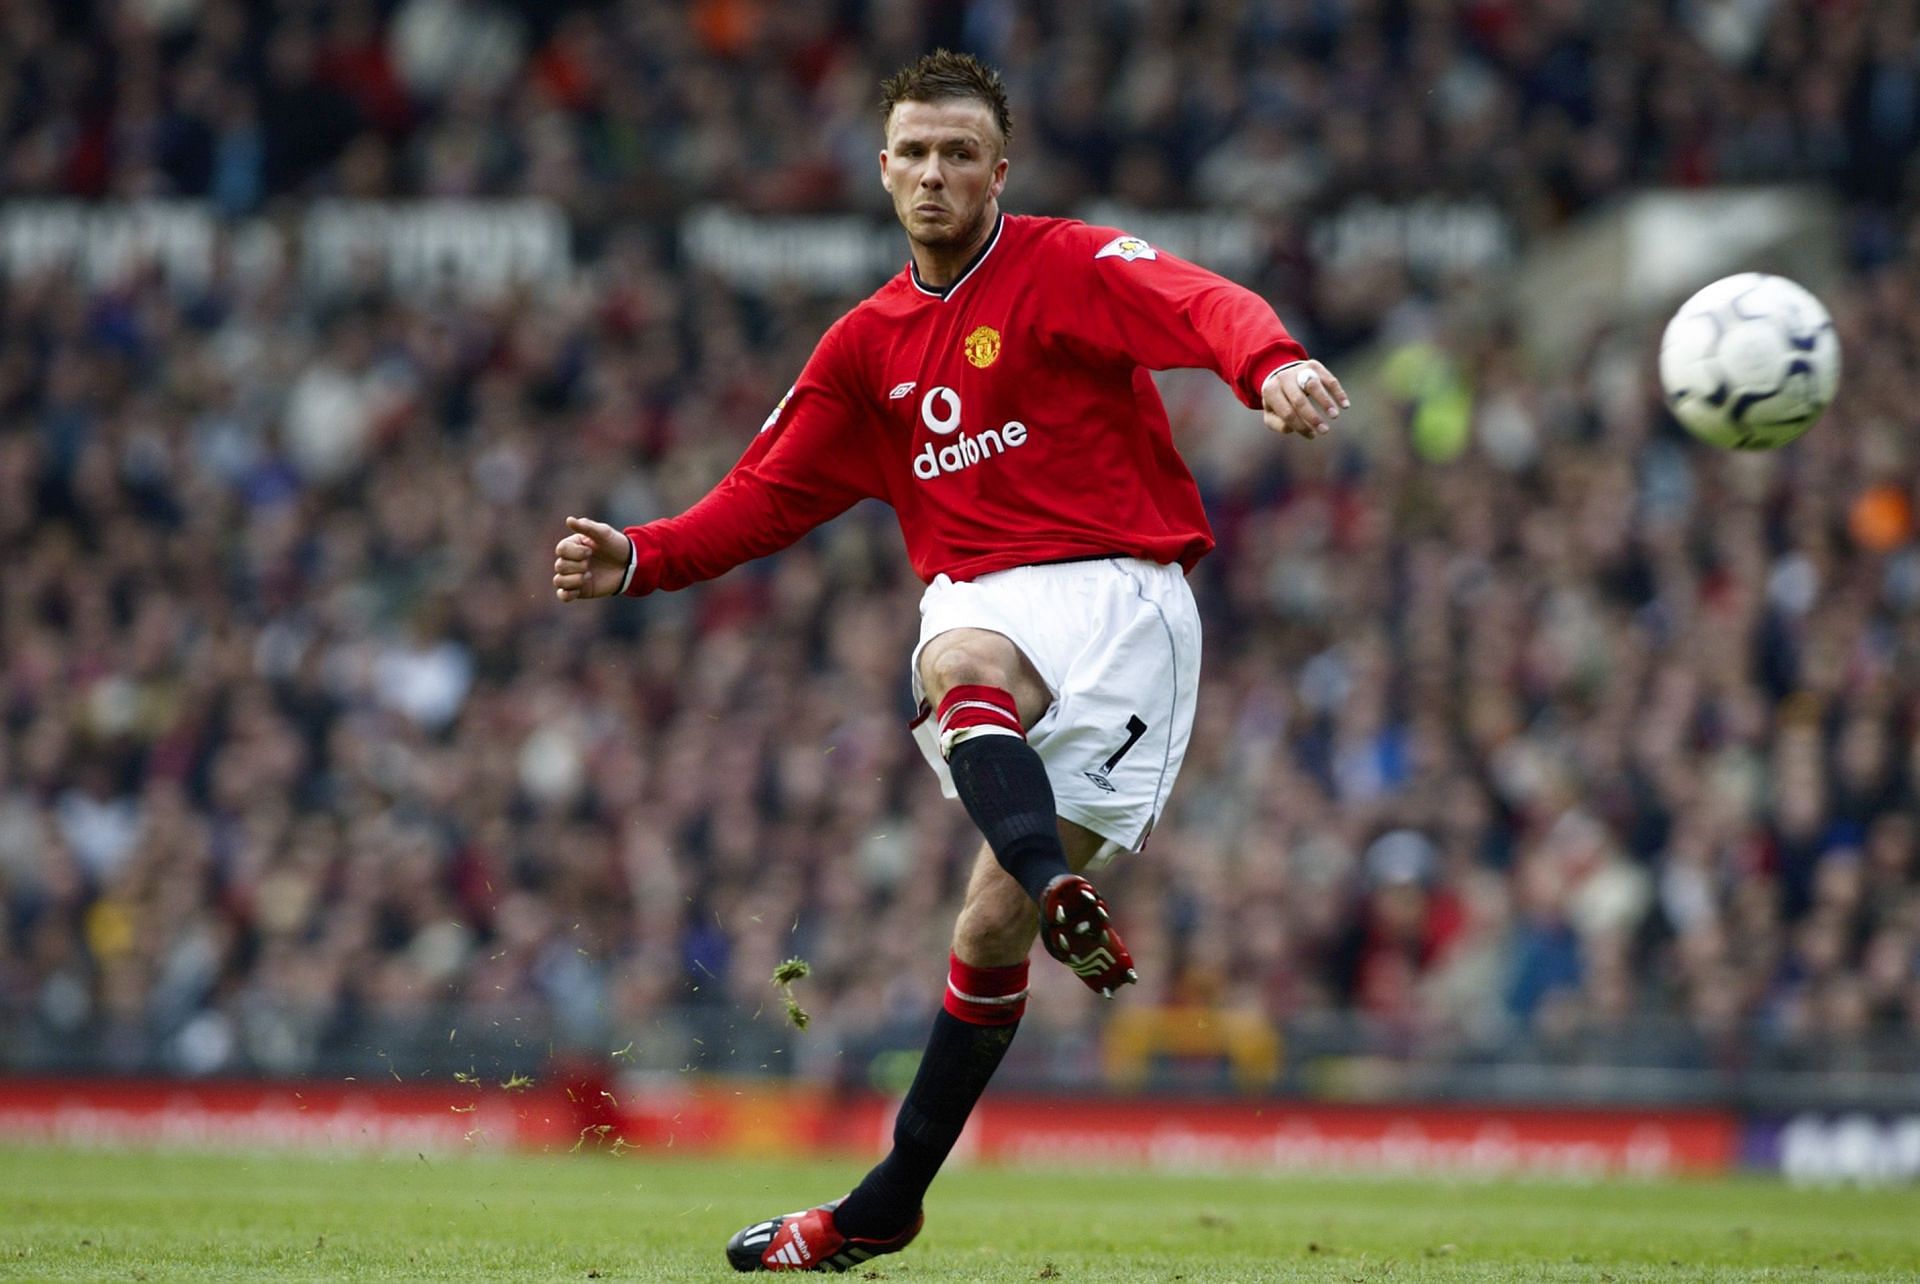 David Beckham lanzando un tiro libre durante su etapa en el Manchester United